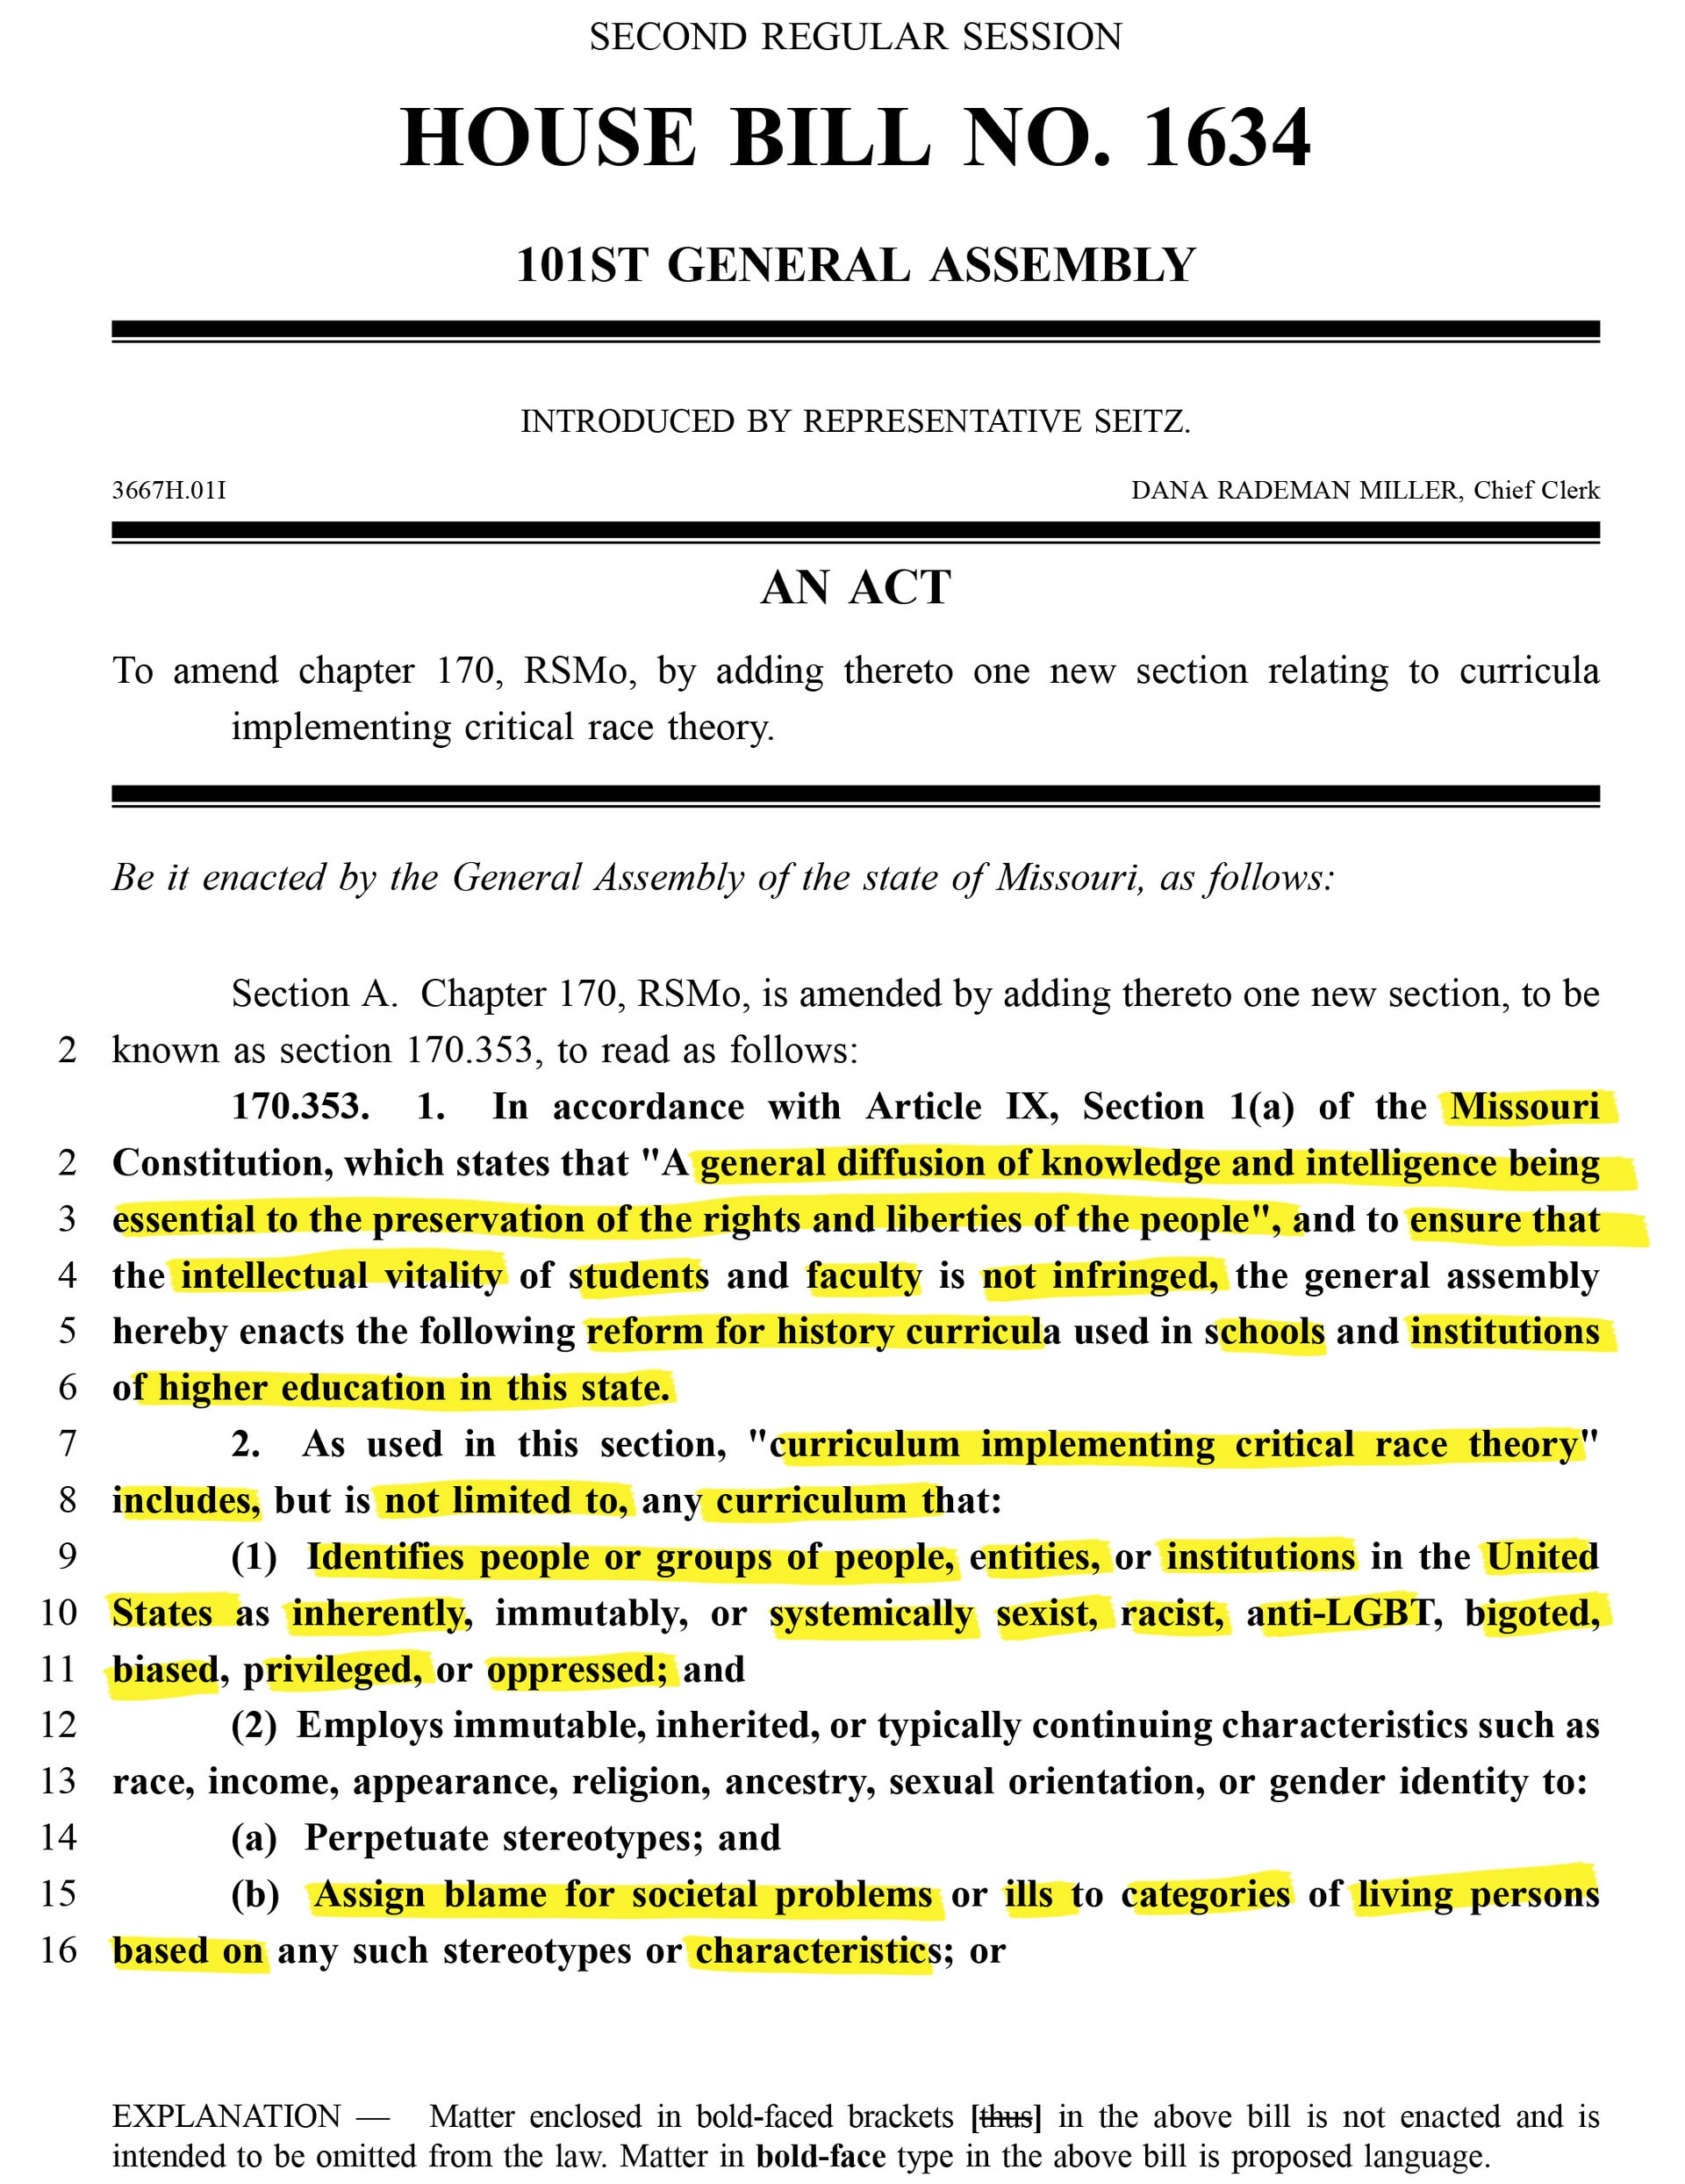 Example Legislation: Missouri House Bill No.1634 1/3